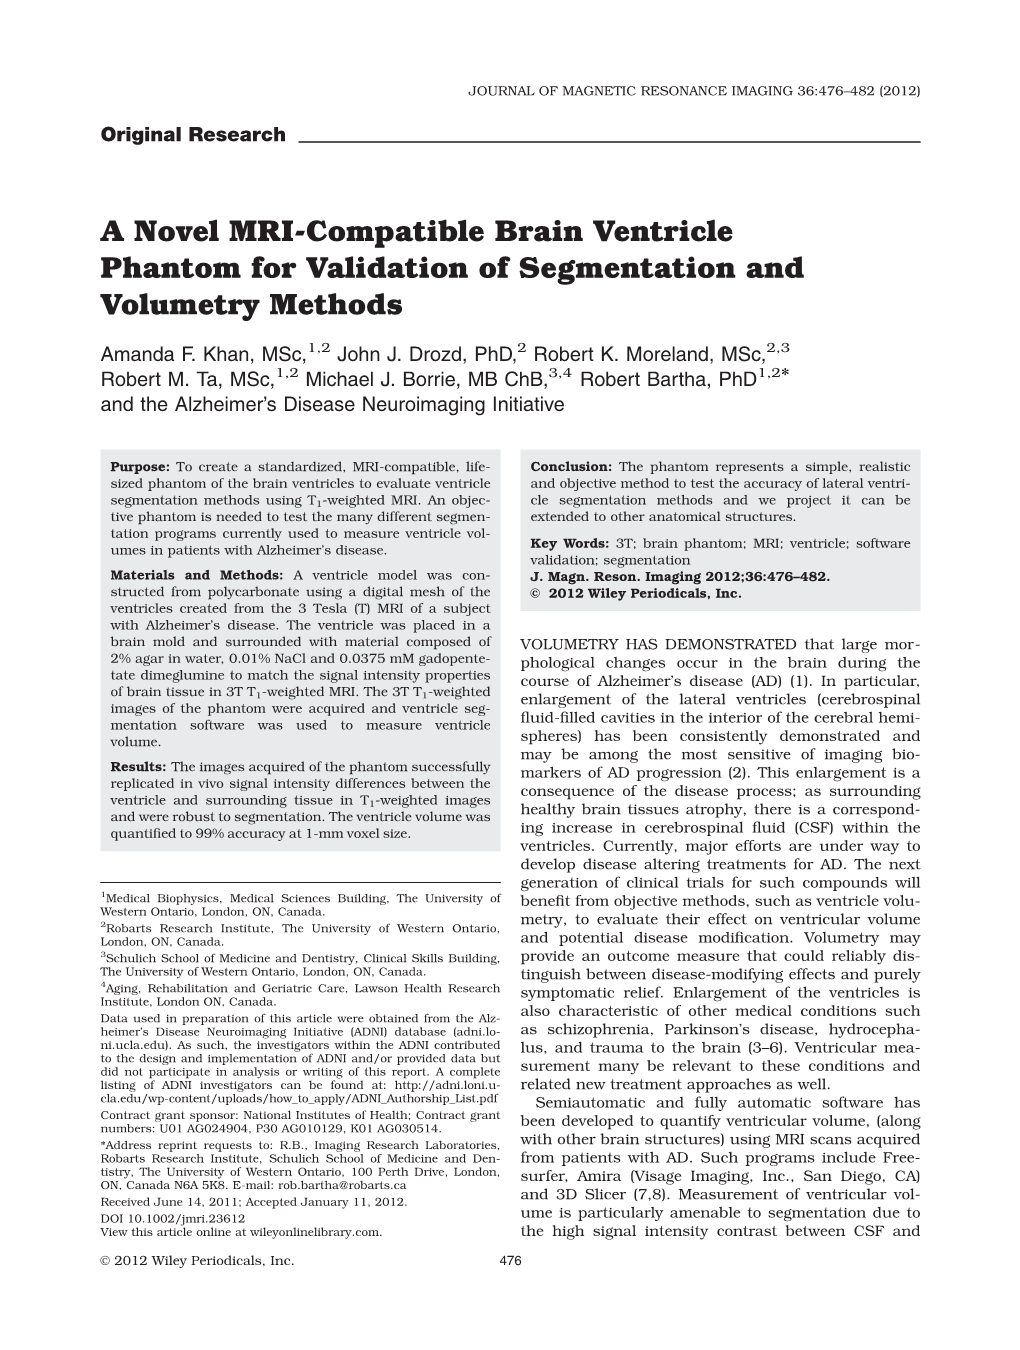 A Novel Mricompatible Brain Ventricle Phantom for Validation of Segmentation and Volumetry Methods